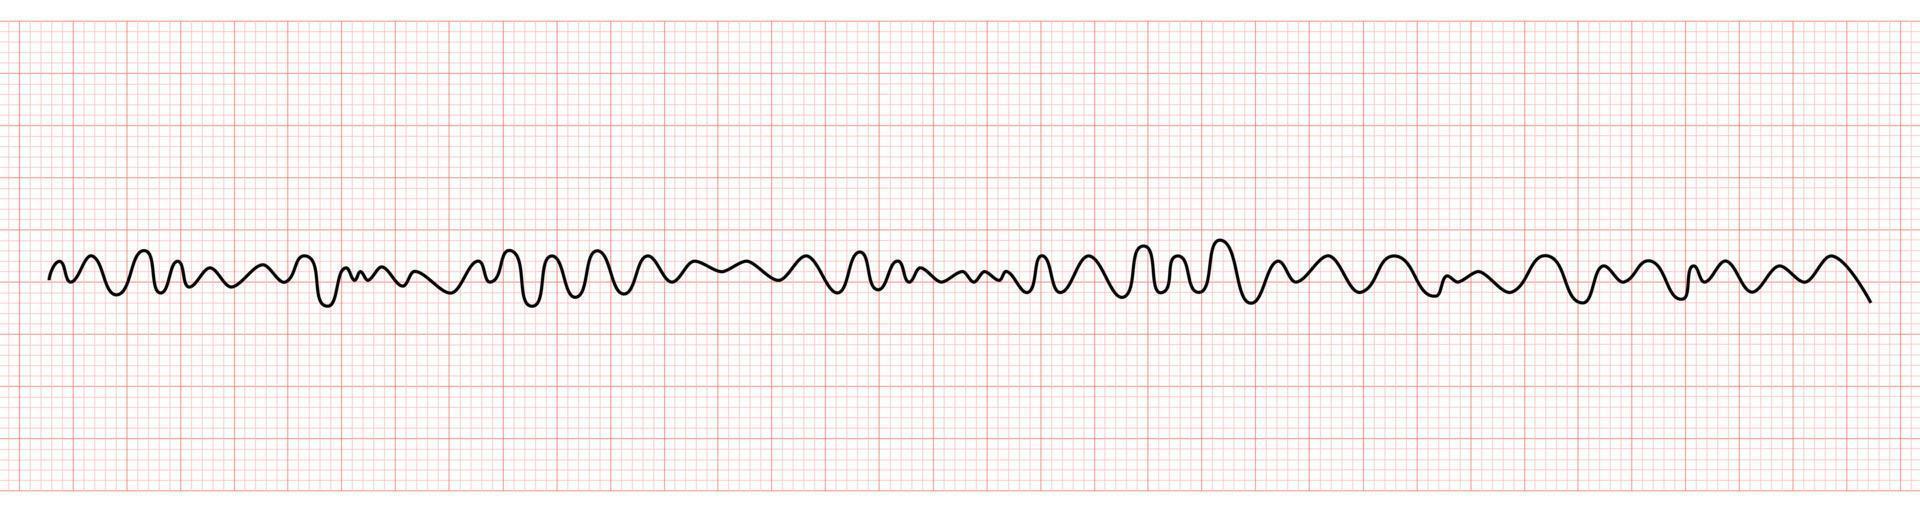 EKG Monitor Showing Ventricular Fibrillation or VF vector